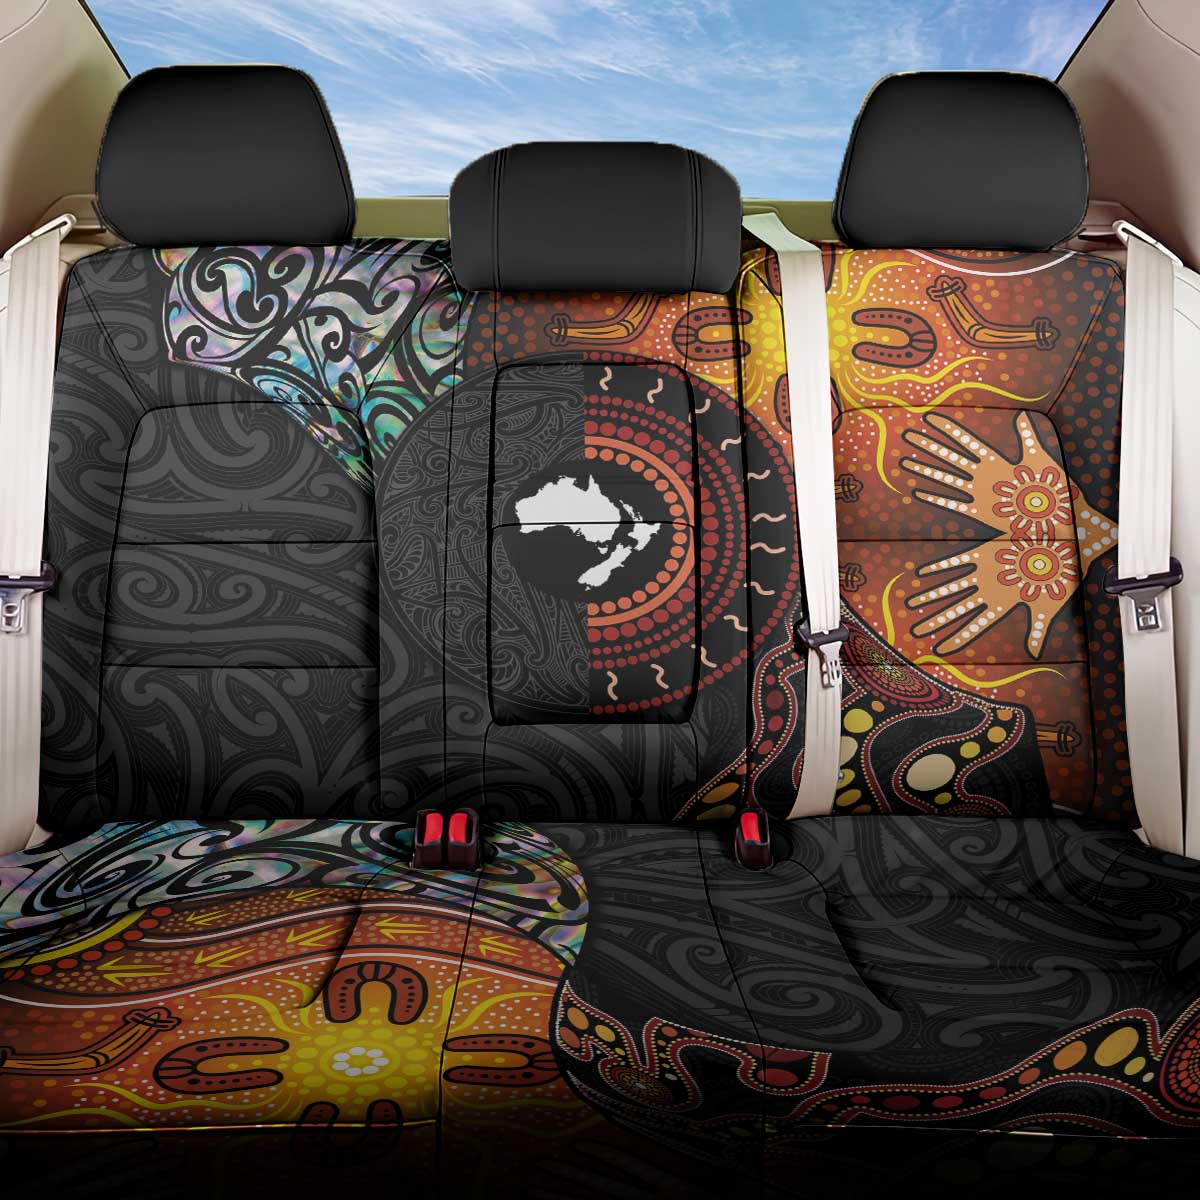 New Zealand and Australia Together Back Car Seat Cover Maori Tattoo Paua Shell mix Aboriginal Pattern